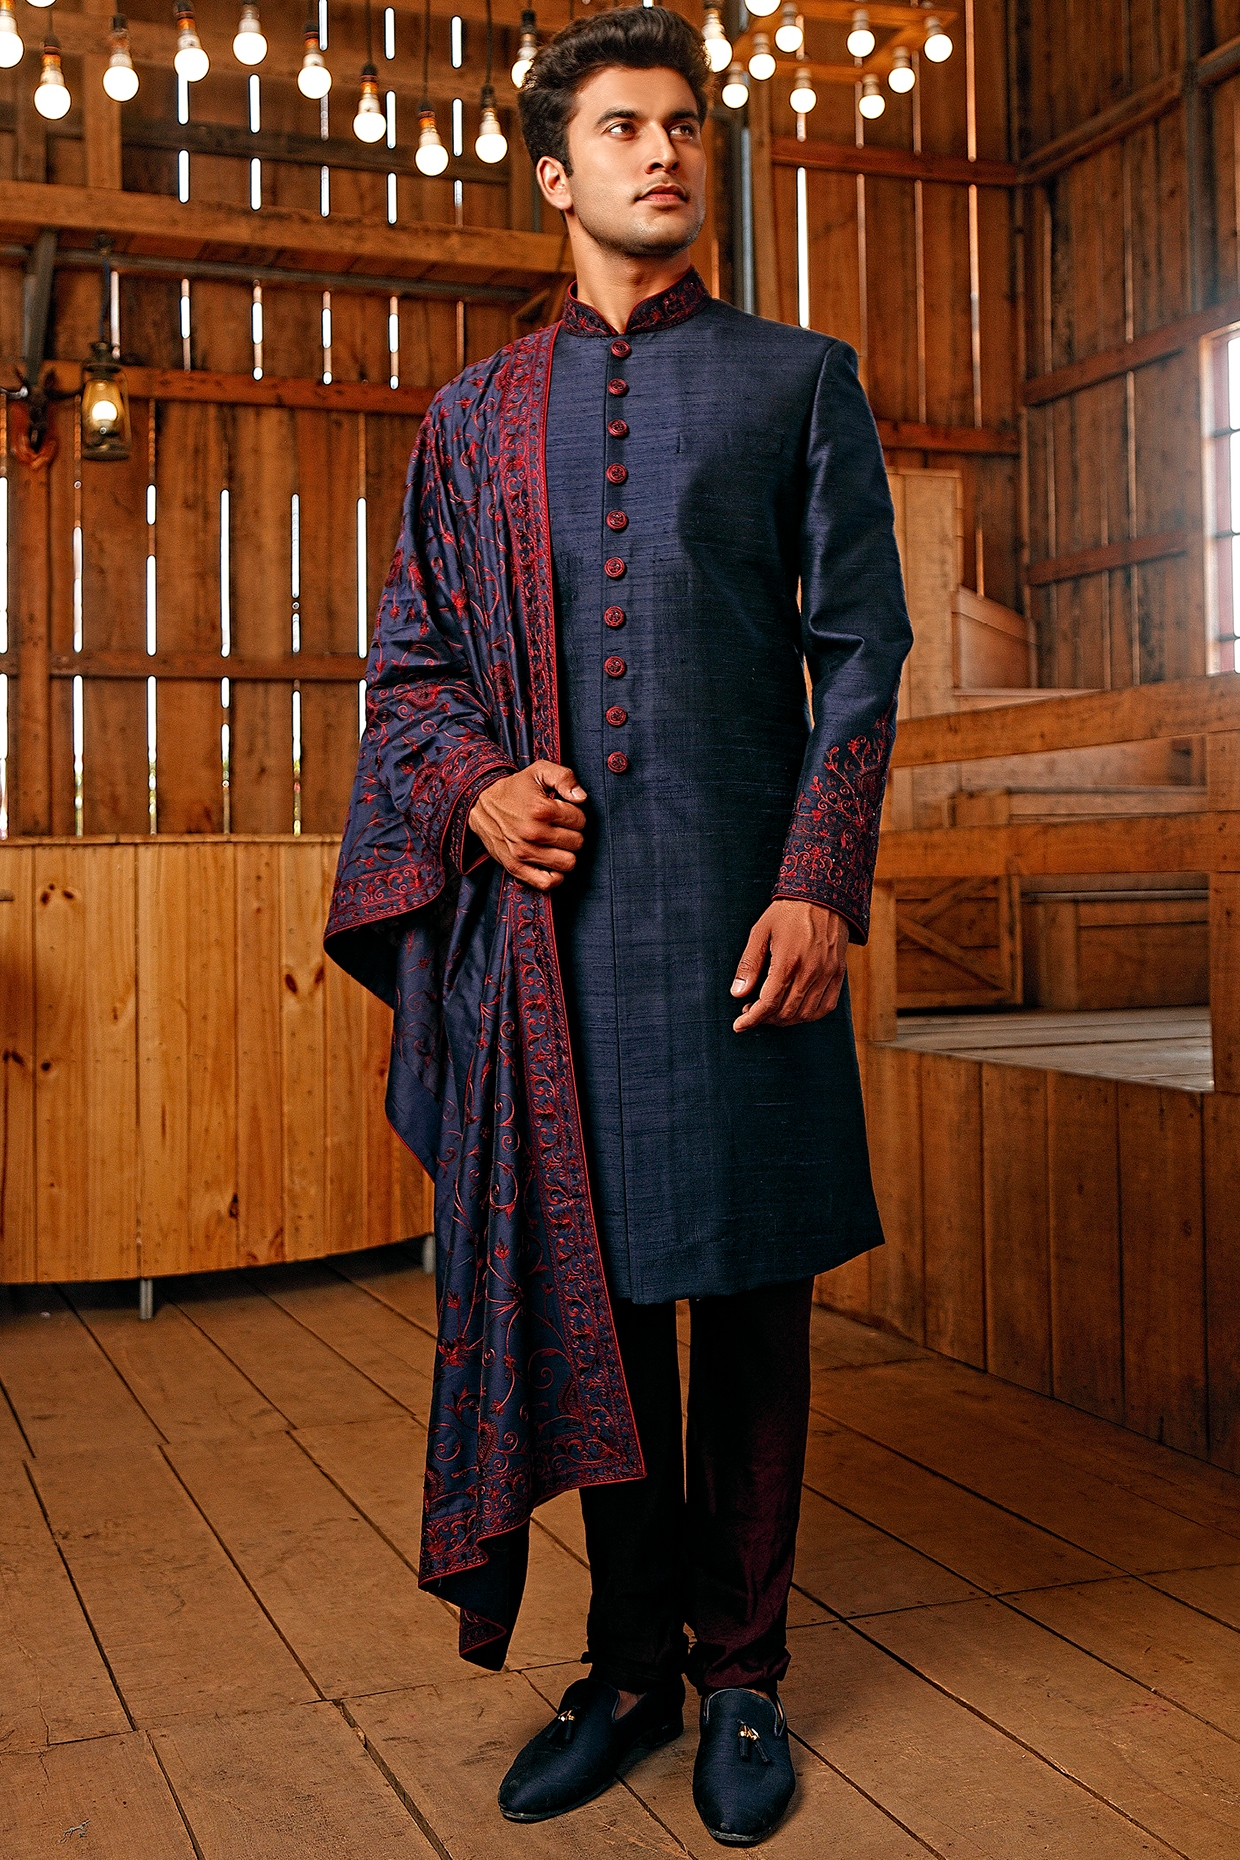 Clothing of Kashmir, Clothing of Ladakh, Kashmir People, Ladakh People,  People & Clothes of Kashmir, People & Clothes of Ladakh, Kashmir Clothing,  Ladakh Clothing